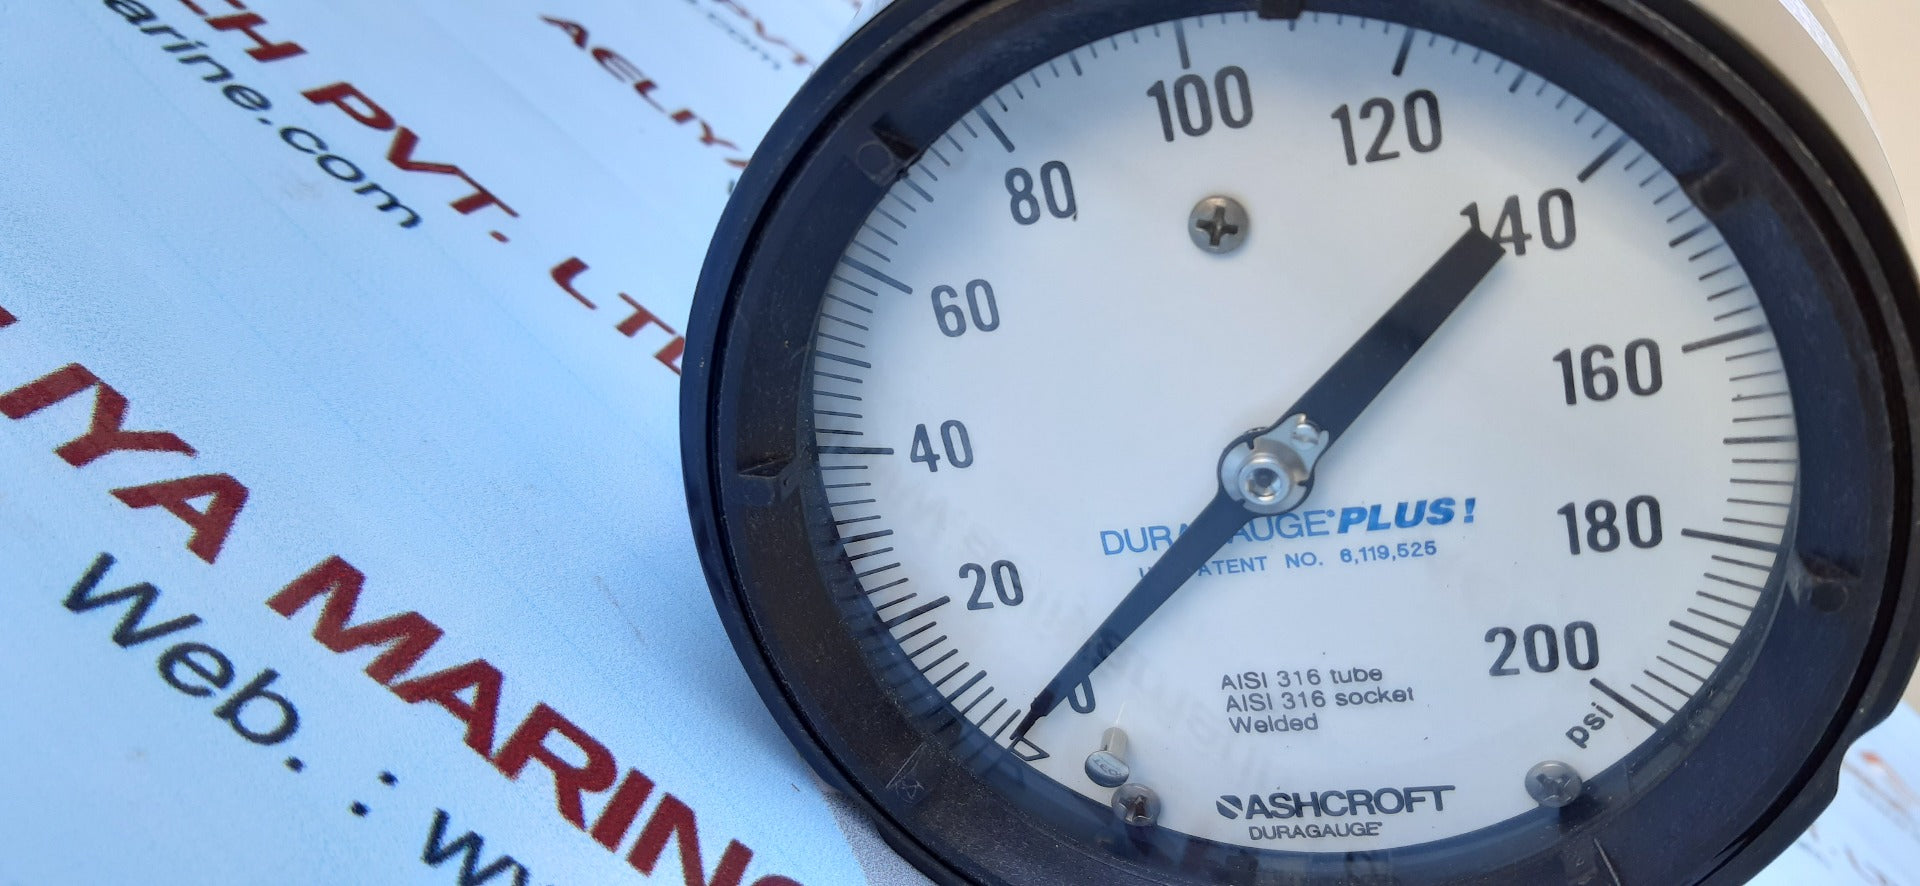 Ashcroft duragauge plus pressure gauge 0-200 psi aisi 316 tube 316aisi socket